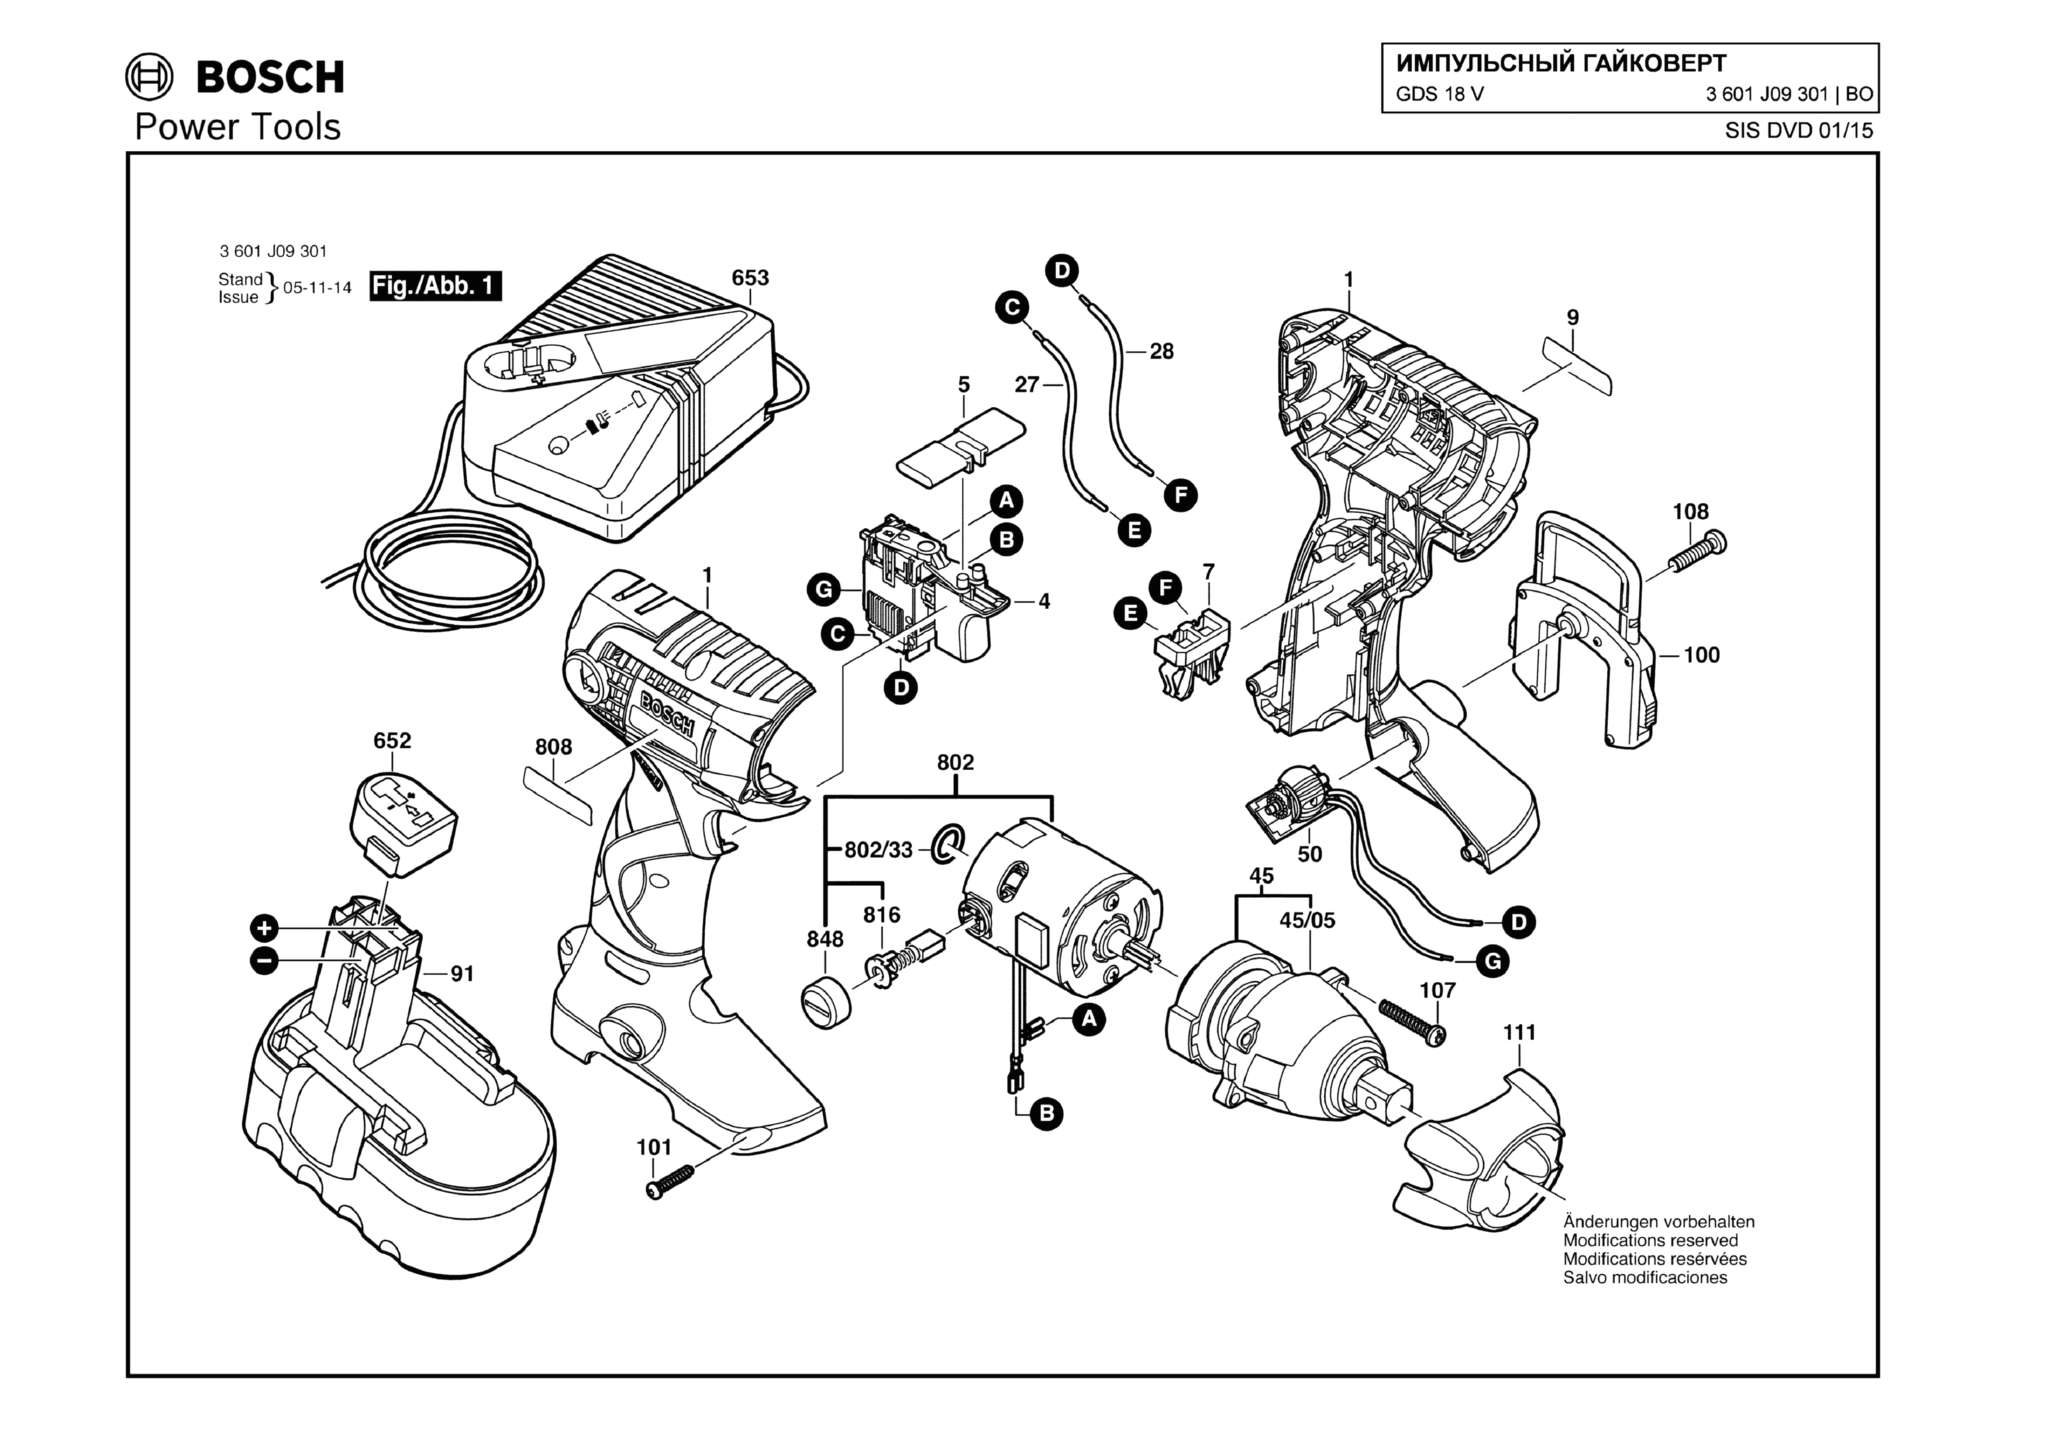 Запчасти, схема и деталировка Bosch GDS 18 V (ТИП 3601J09301)